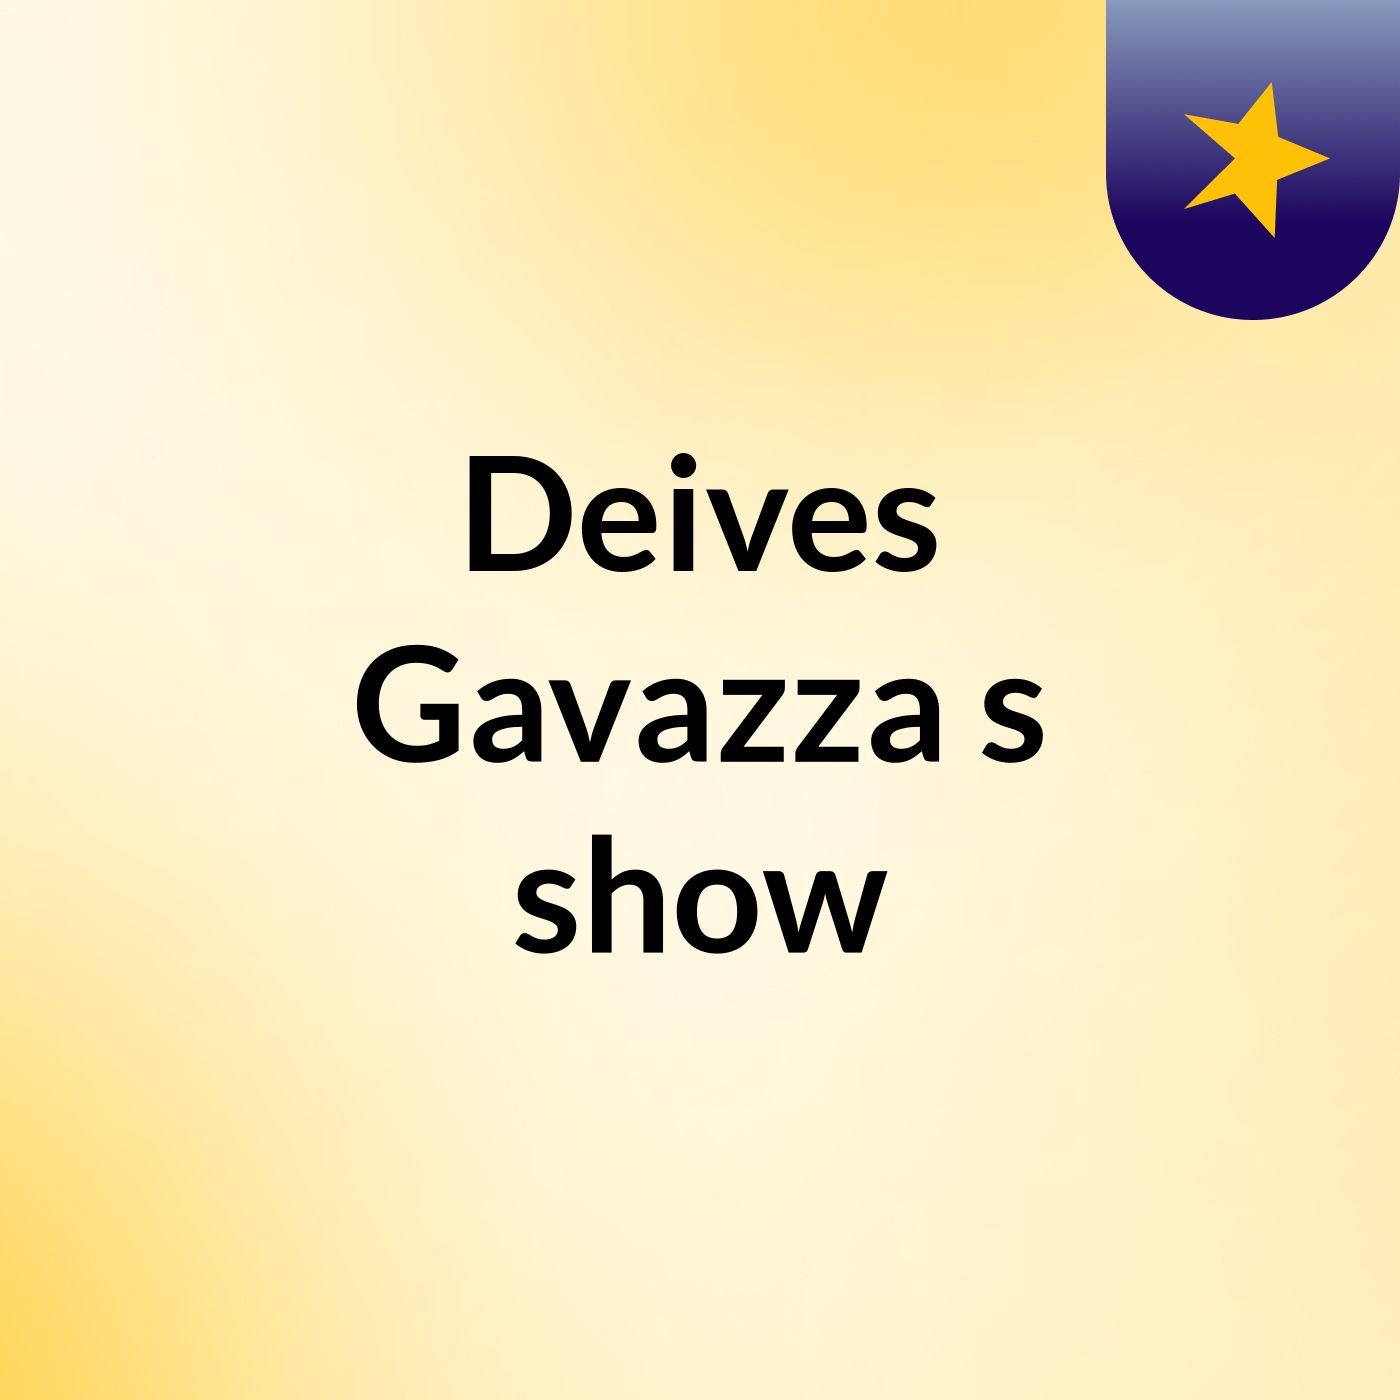 Deives Gavazza's show